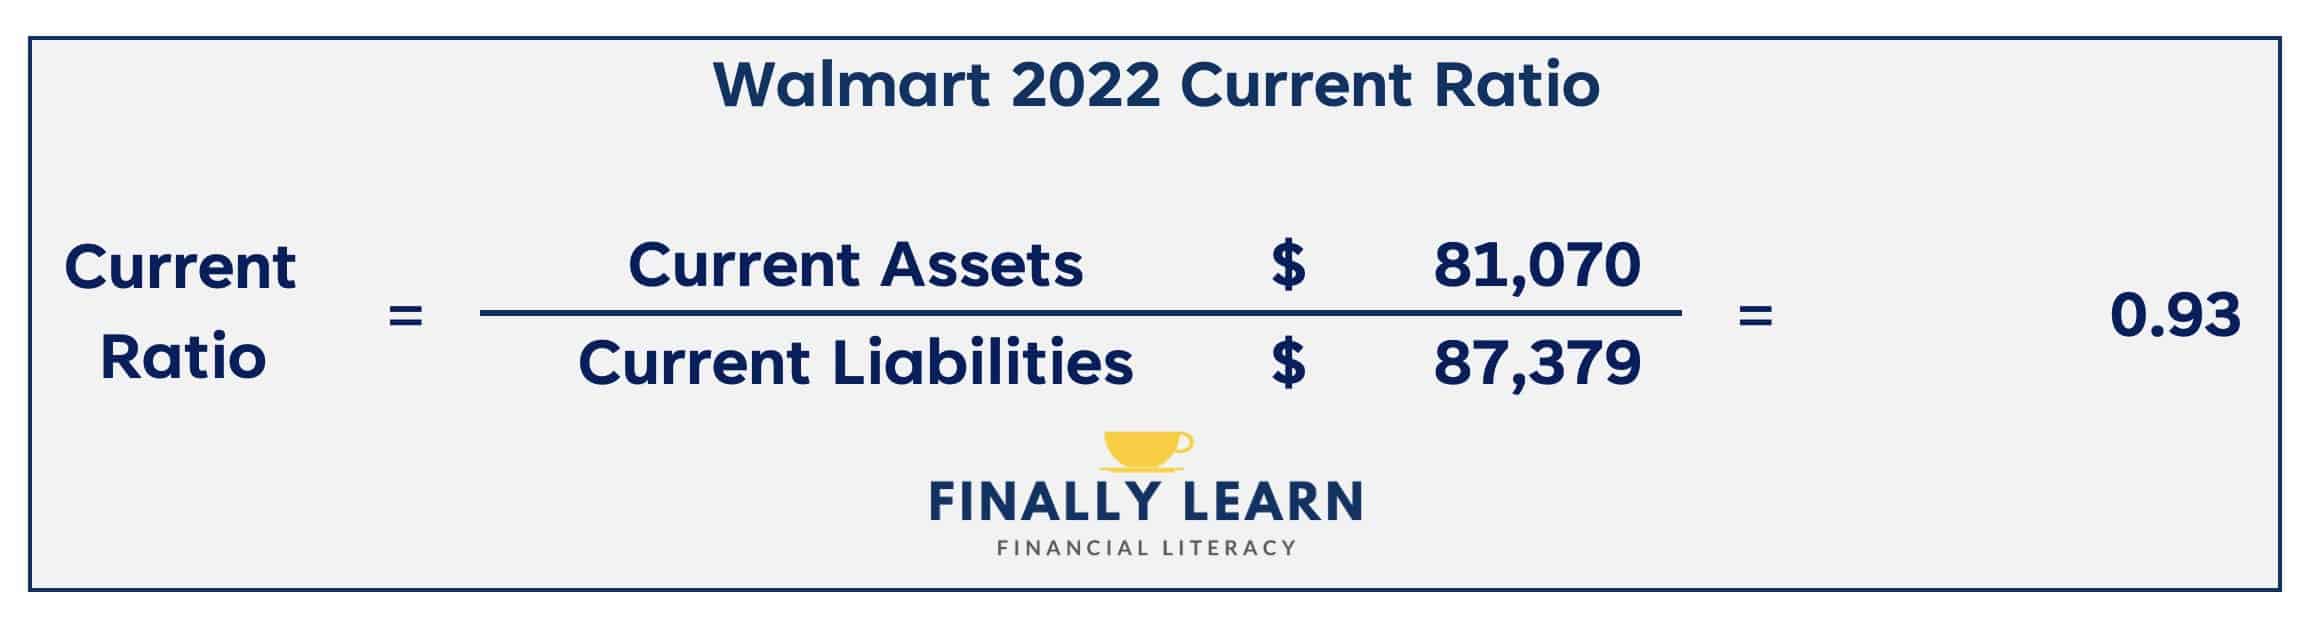 Walmart 2022 Current Ratio